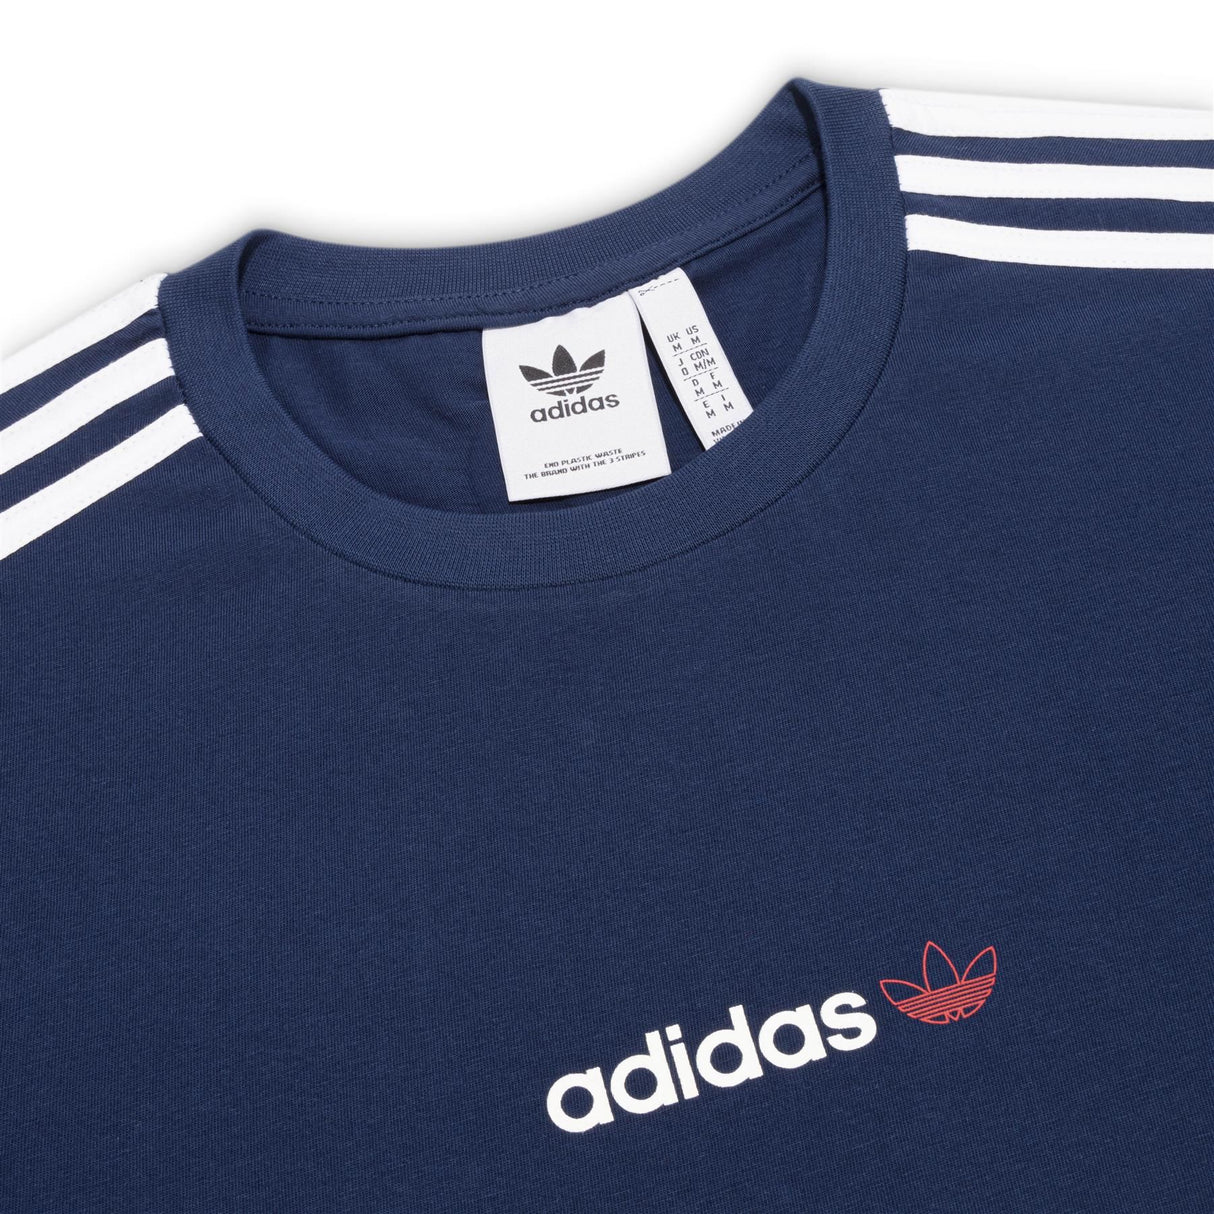 Adidas Originals Itasca 20 Short Sleeve T Shirt in Blue/White